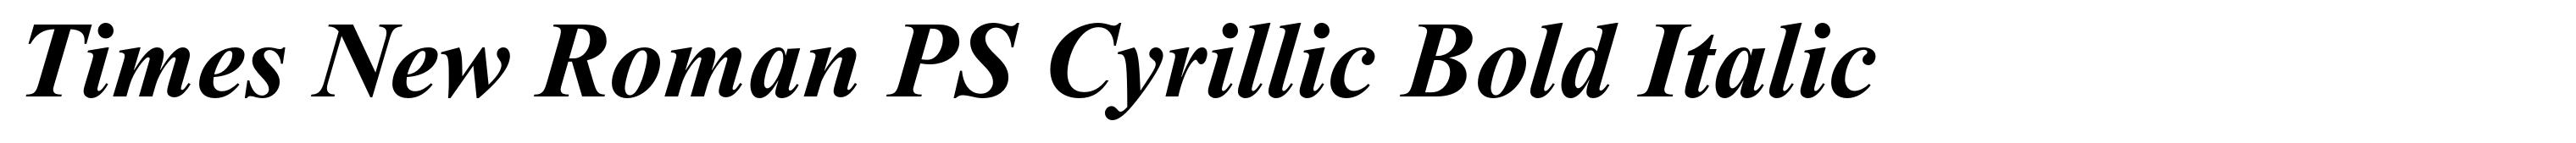 Times New Roman PS Cyrillic Bold Italic